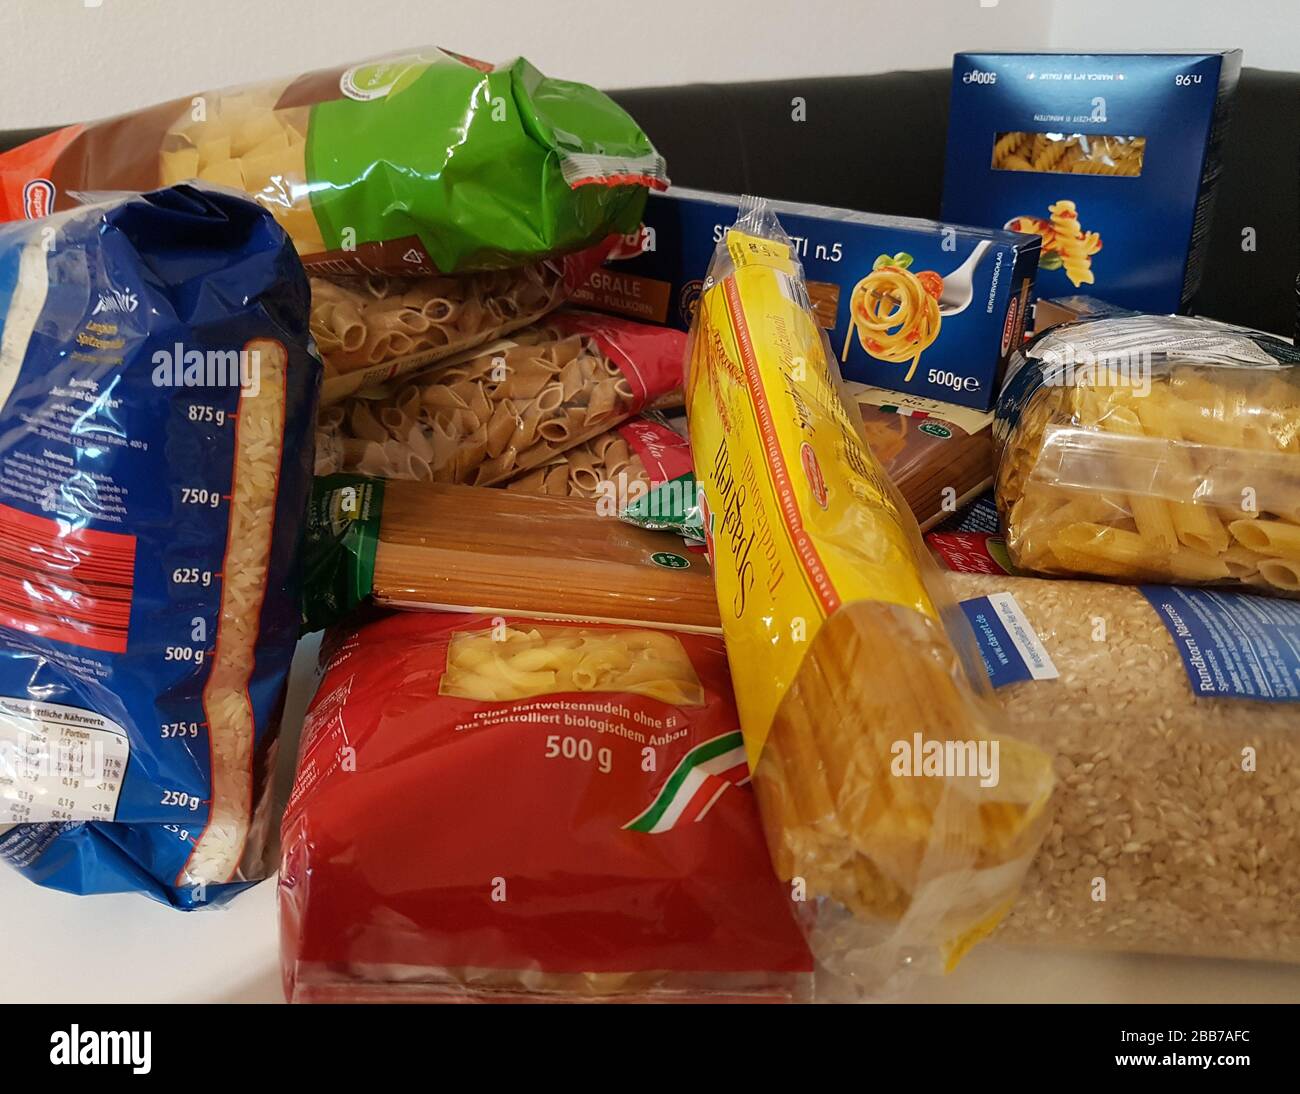 Non-perishable food hoarding ' Hamsterkäufe ' like noodles - full shopping basket shelf - pile of products - fear of epidemic corona virus / covid-19 Stock Photo